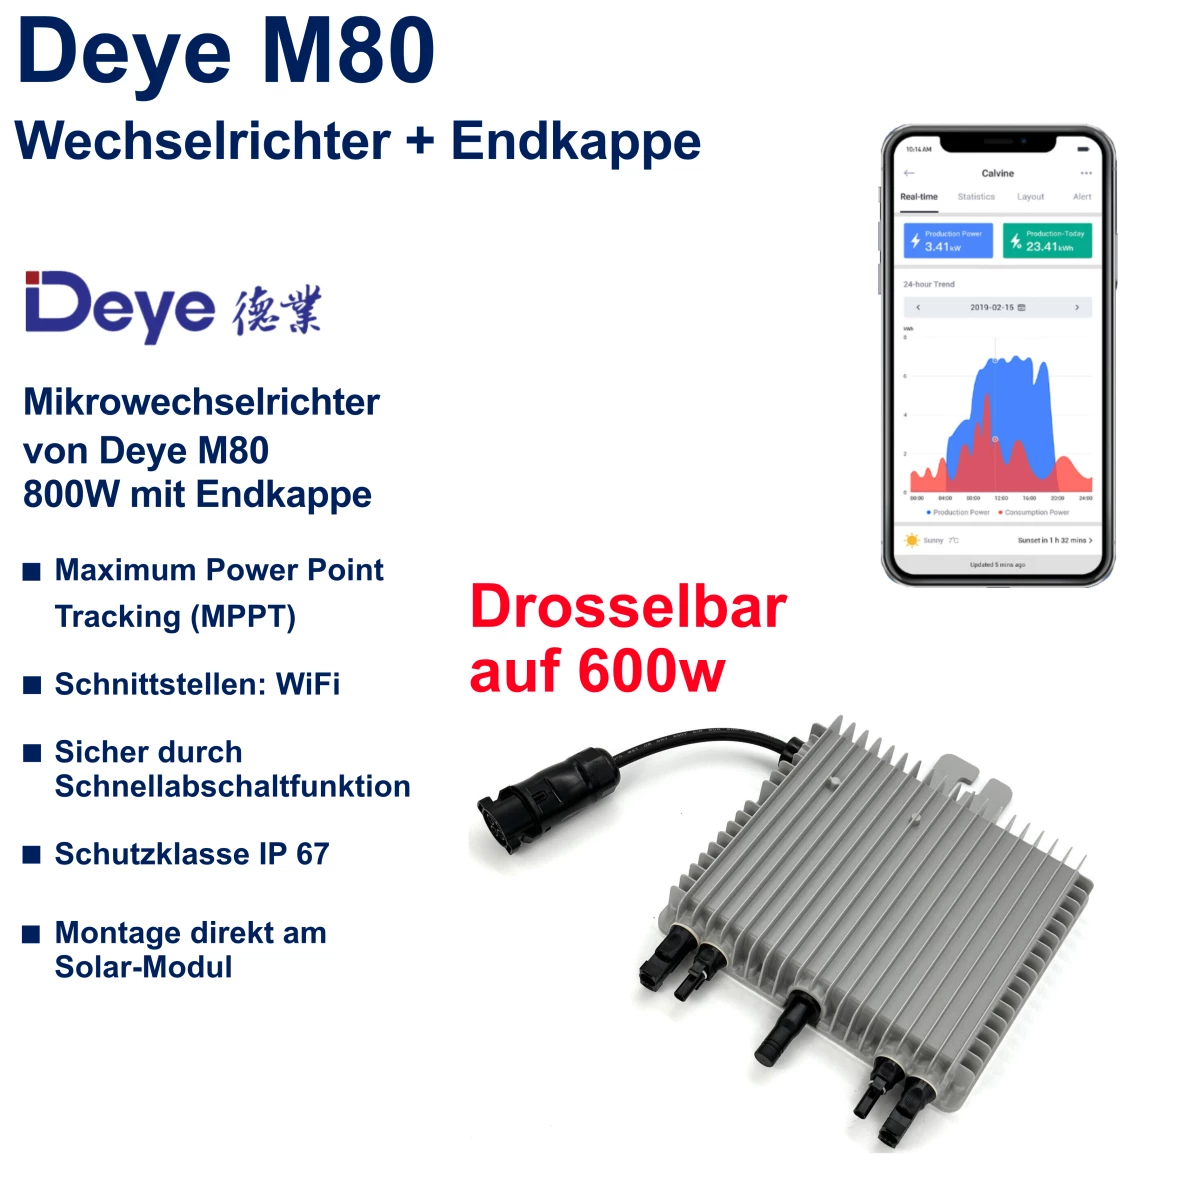 https://www.dealclub.de/images/detailed/5/mkt-balkonkraftwerk-set-2-x-risen-solarpanele-410w-820w-deye-sun-m80-800w-mikrowechselrichter-drosselbar-auf-600w-endkappe-schuko-anschlusskabel-verlaengerungskabel~3.png